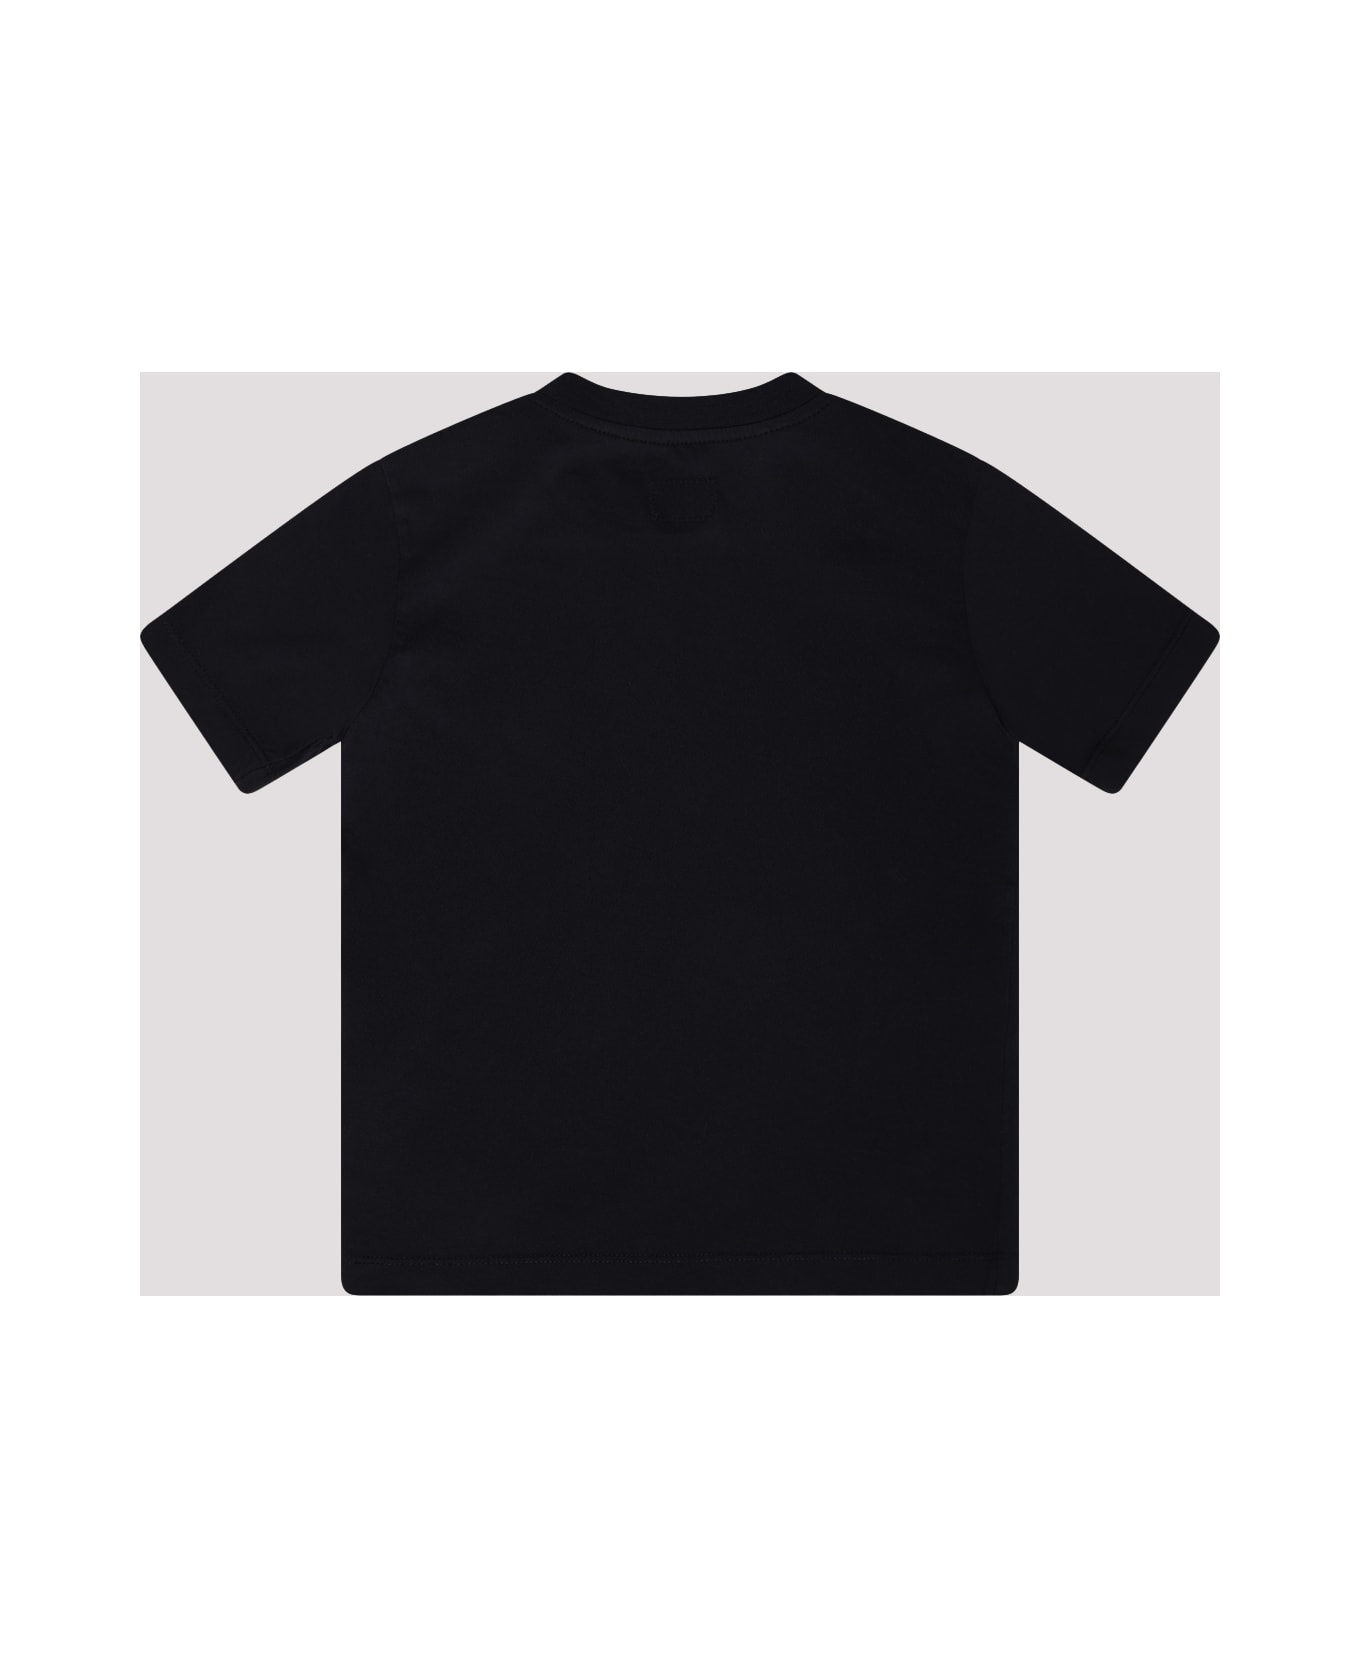 C.P. Company Black Cotton T-shirt - NERO/BLACK